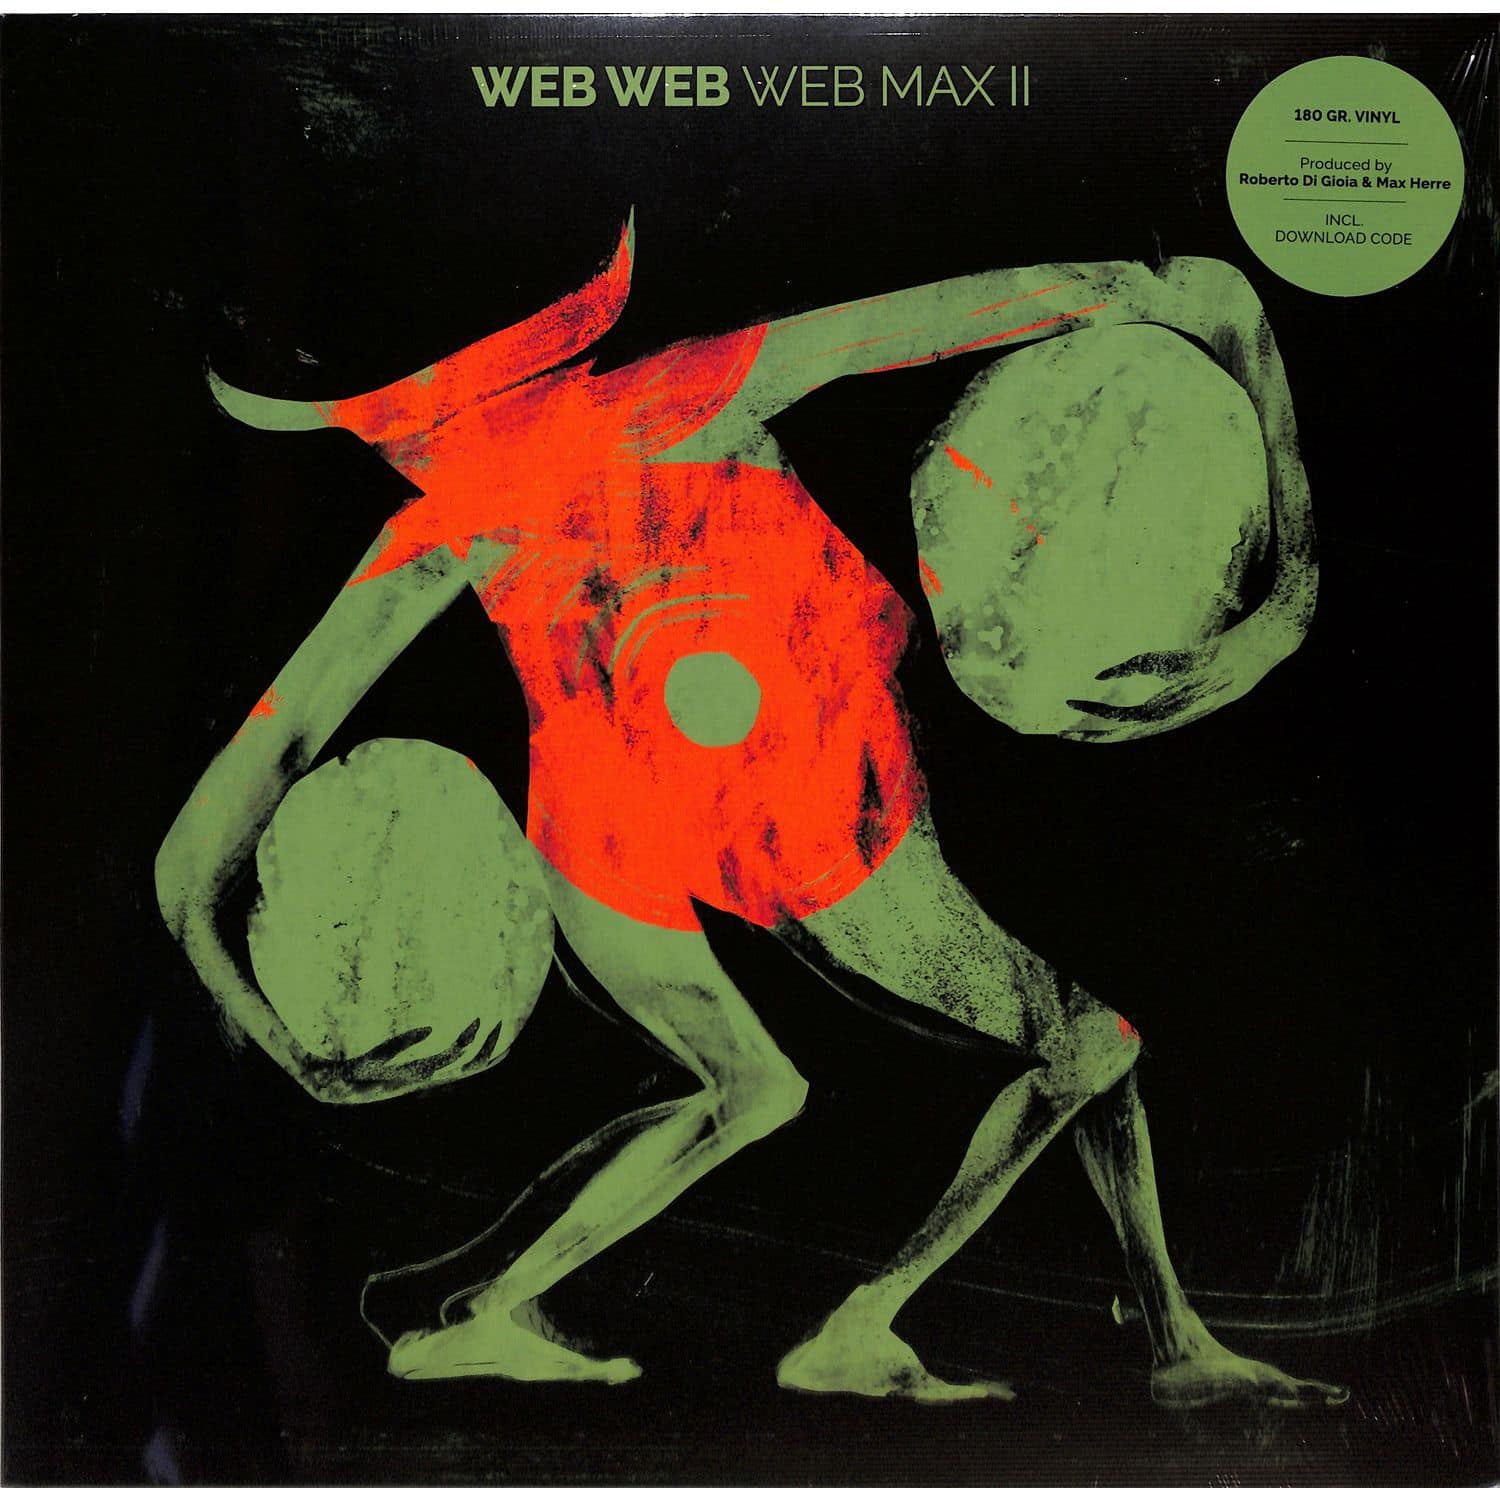 Web Web / Max Herre - WEB MAX II 